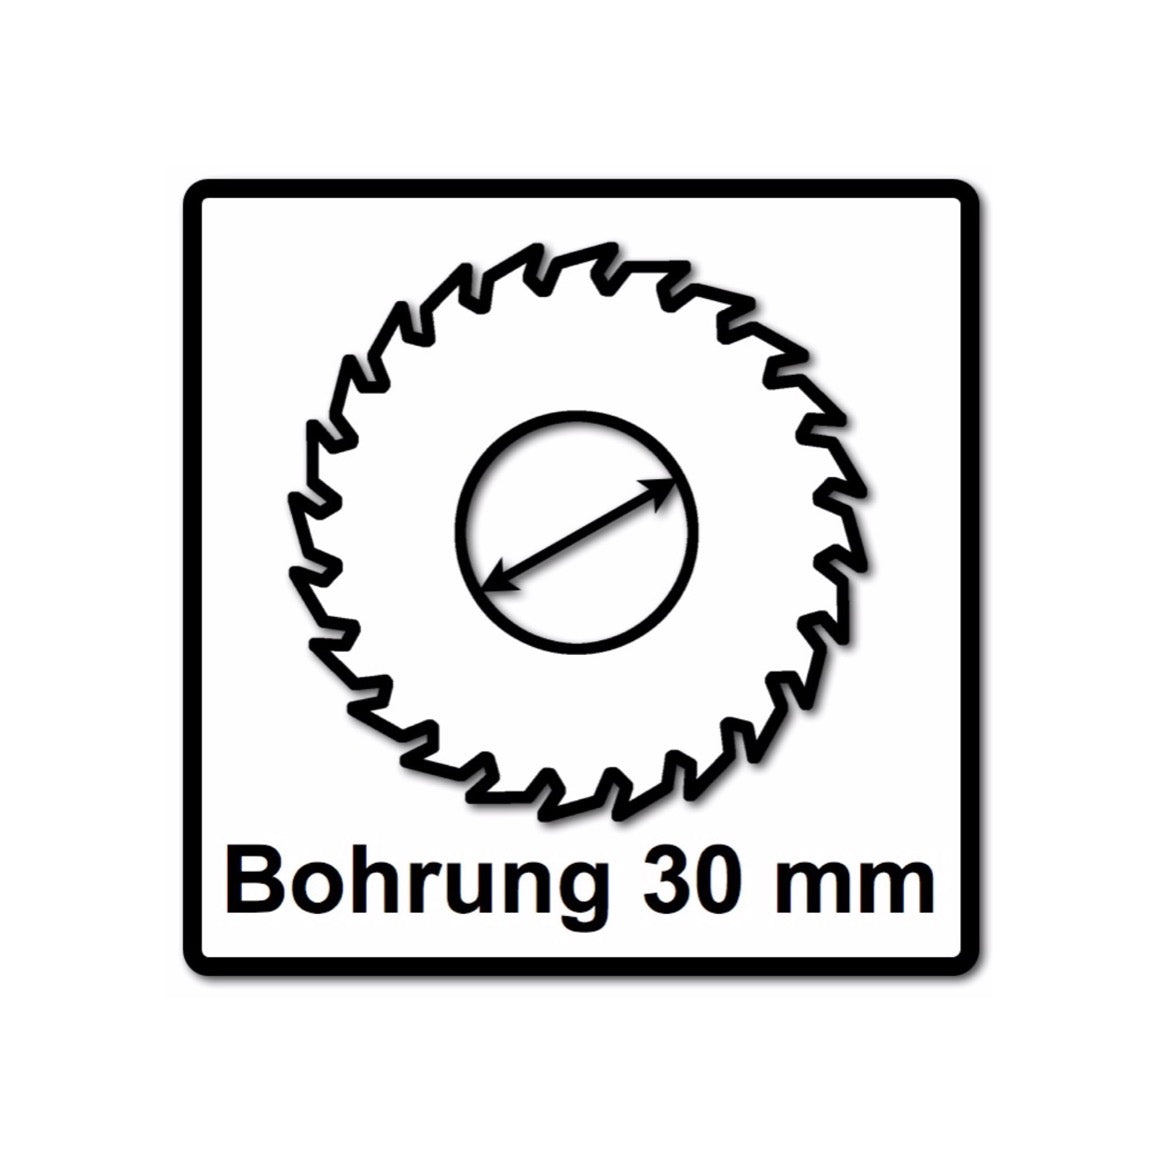 Bosch Kreissägeblatt Expert for Aluminium 216 x 30 x 2,6 mm 64Z ( 2608 –  Toolbrothers